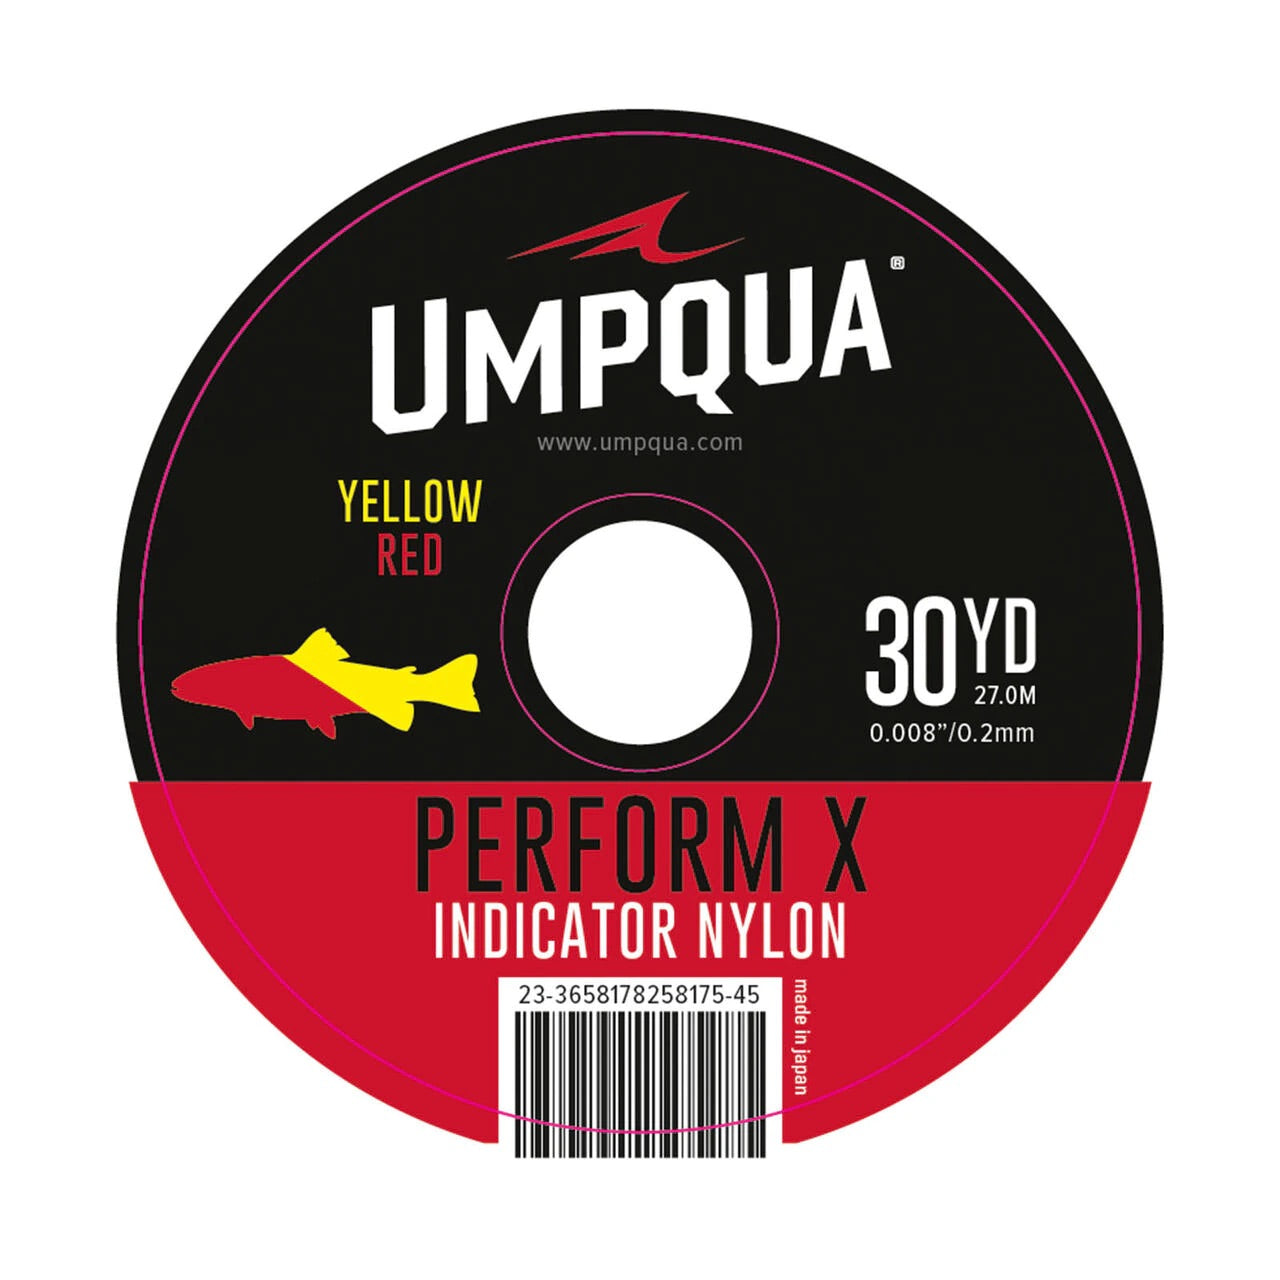 Umpqua Perform X Indicator Nylon